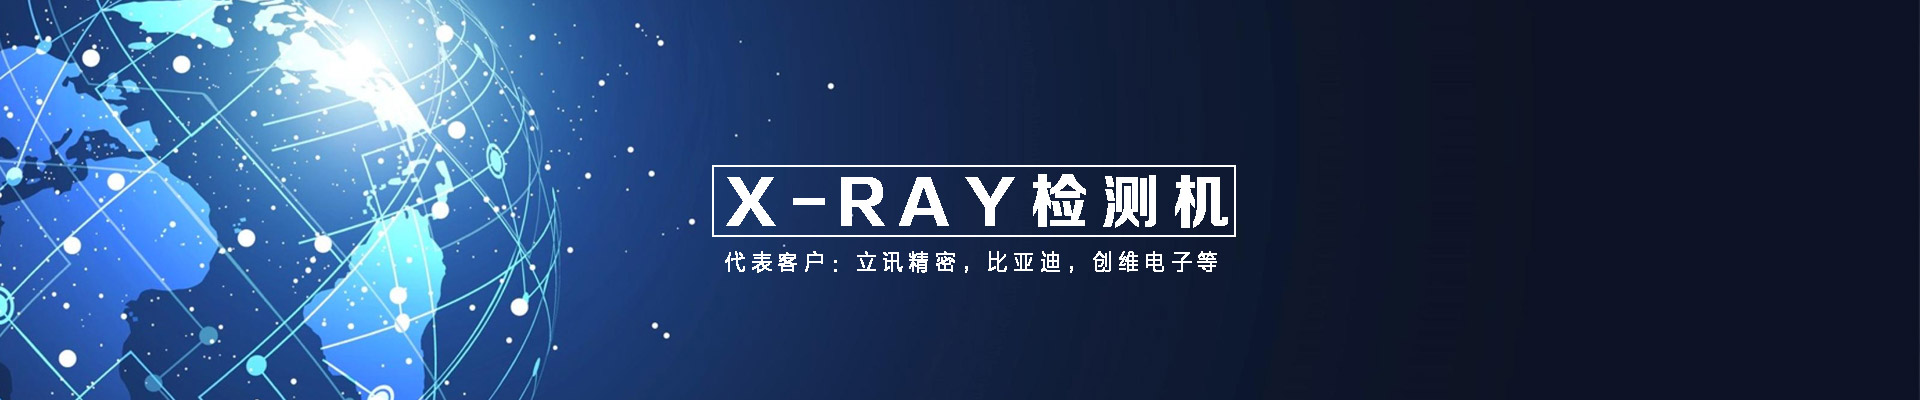 在线X-RAY检测机,X-RAY设备